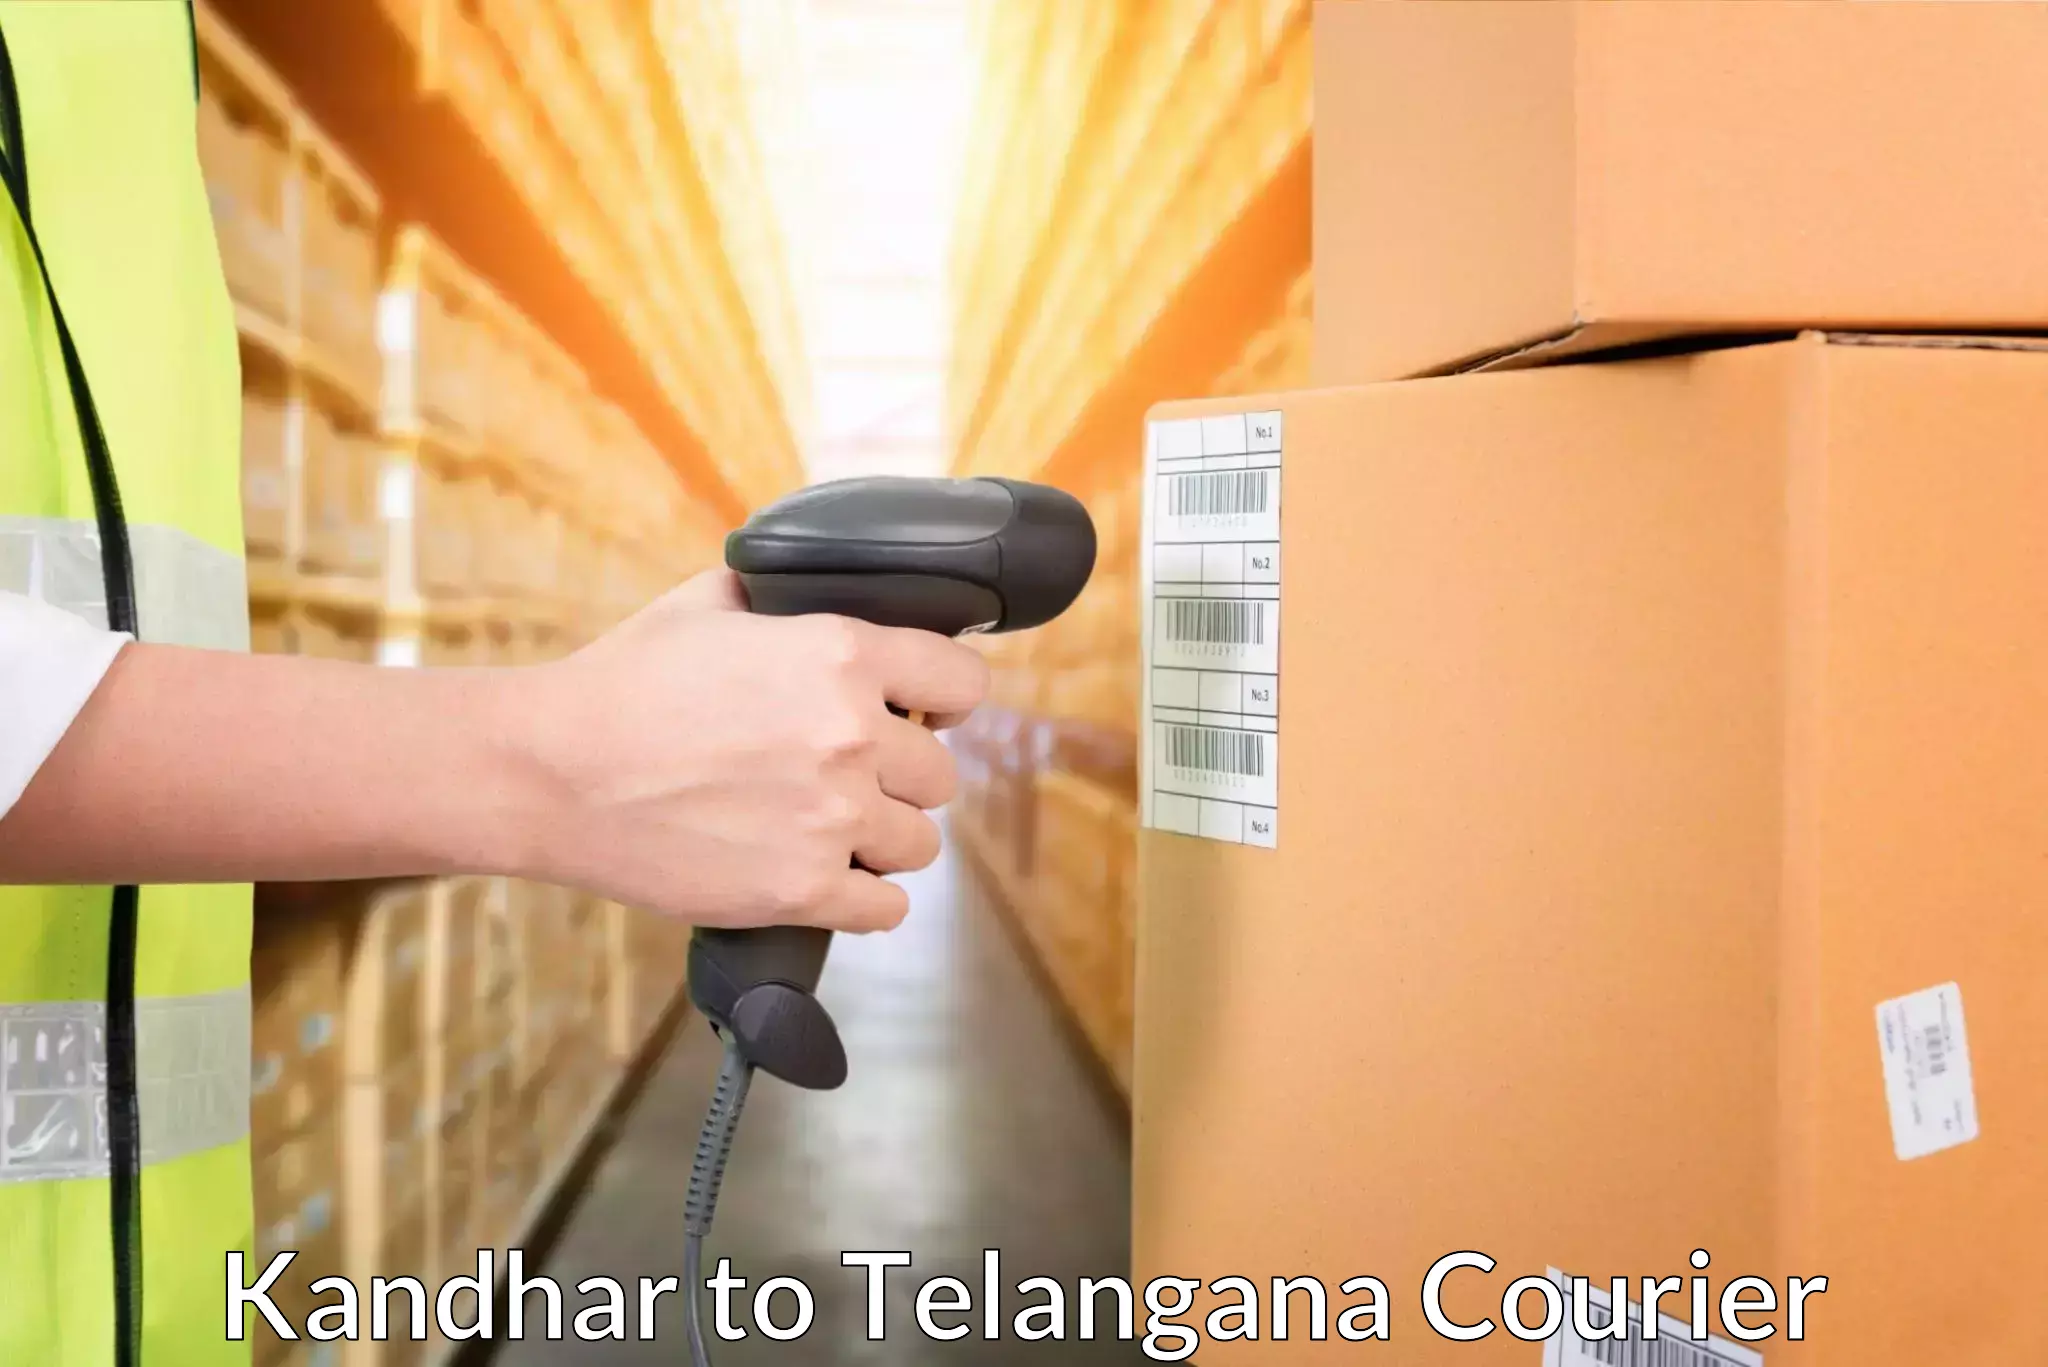 Logistics service provider Kandhar to Telangana